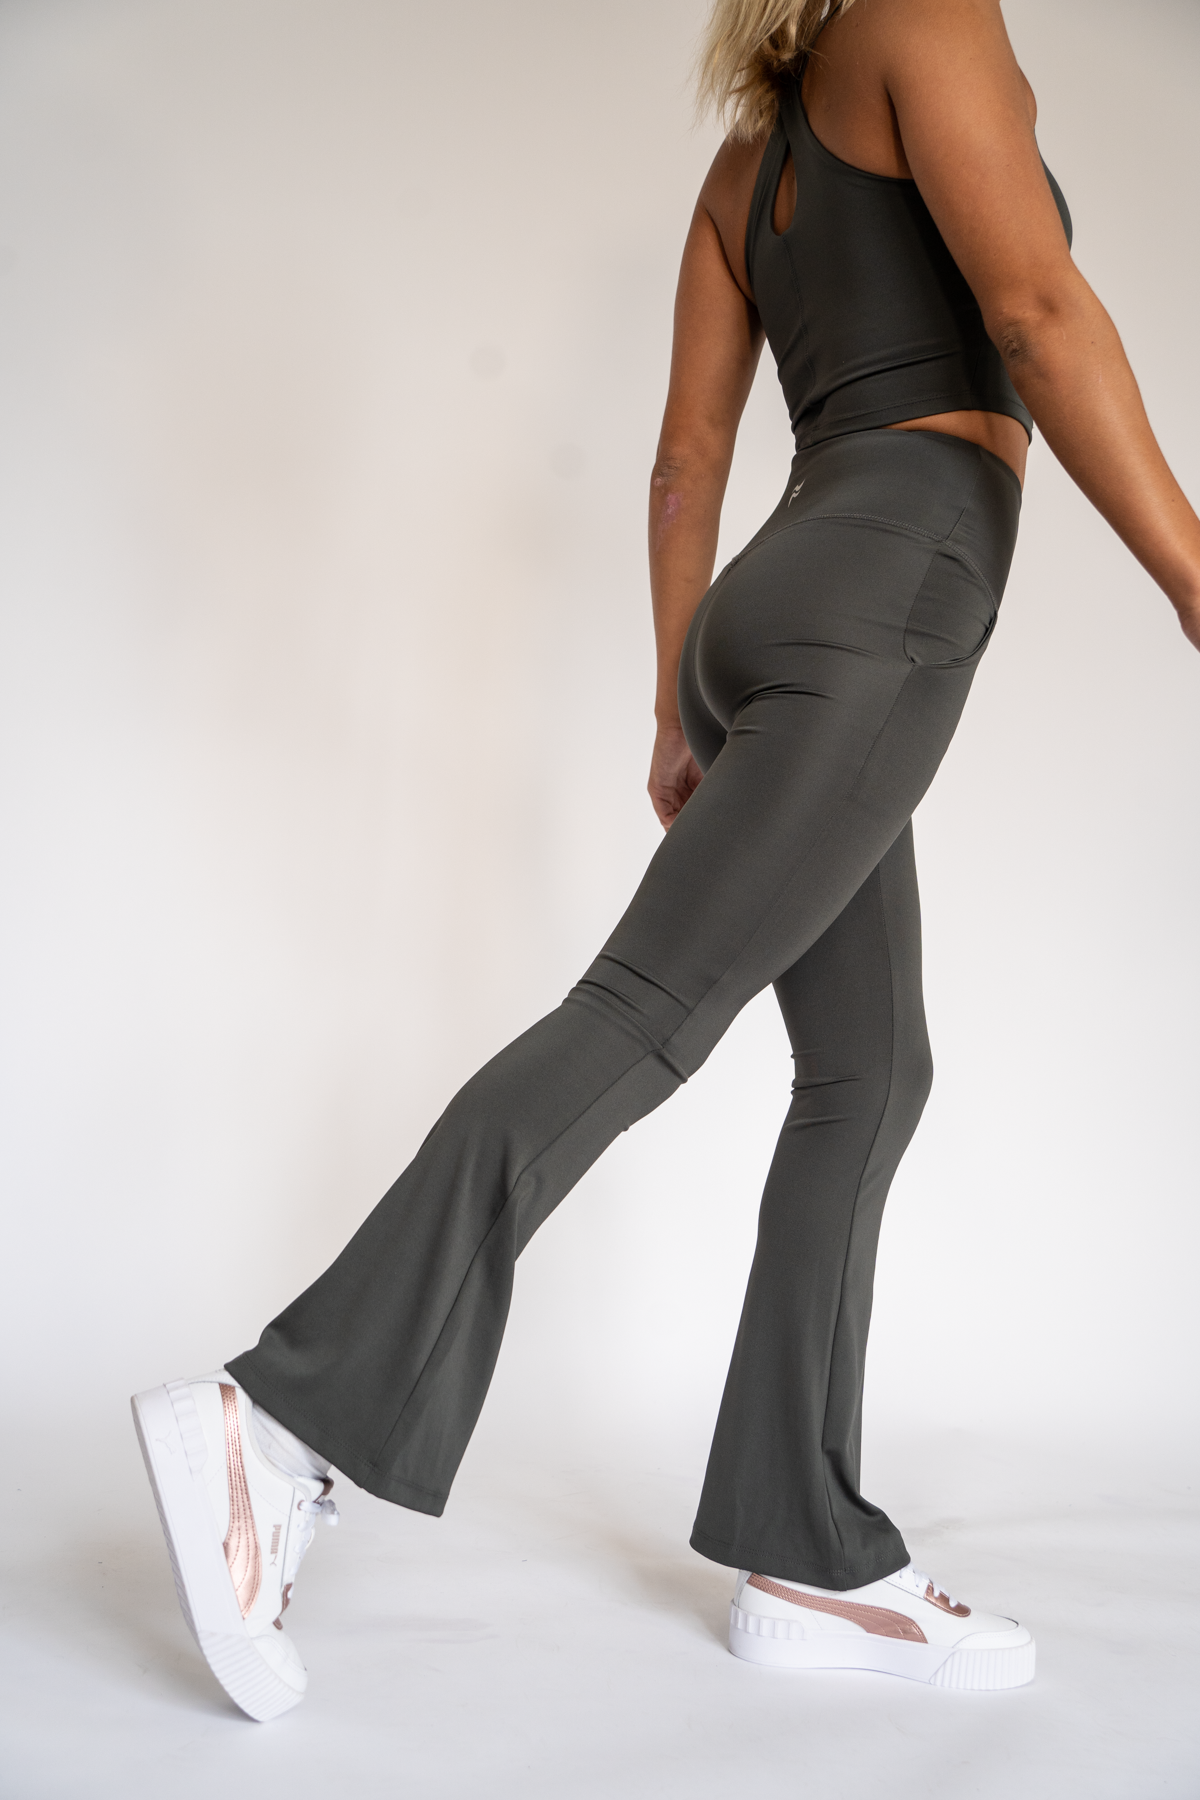 Nike Yoga Core 7/8 Flare Long Pants Black